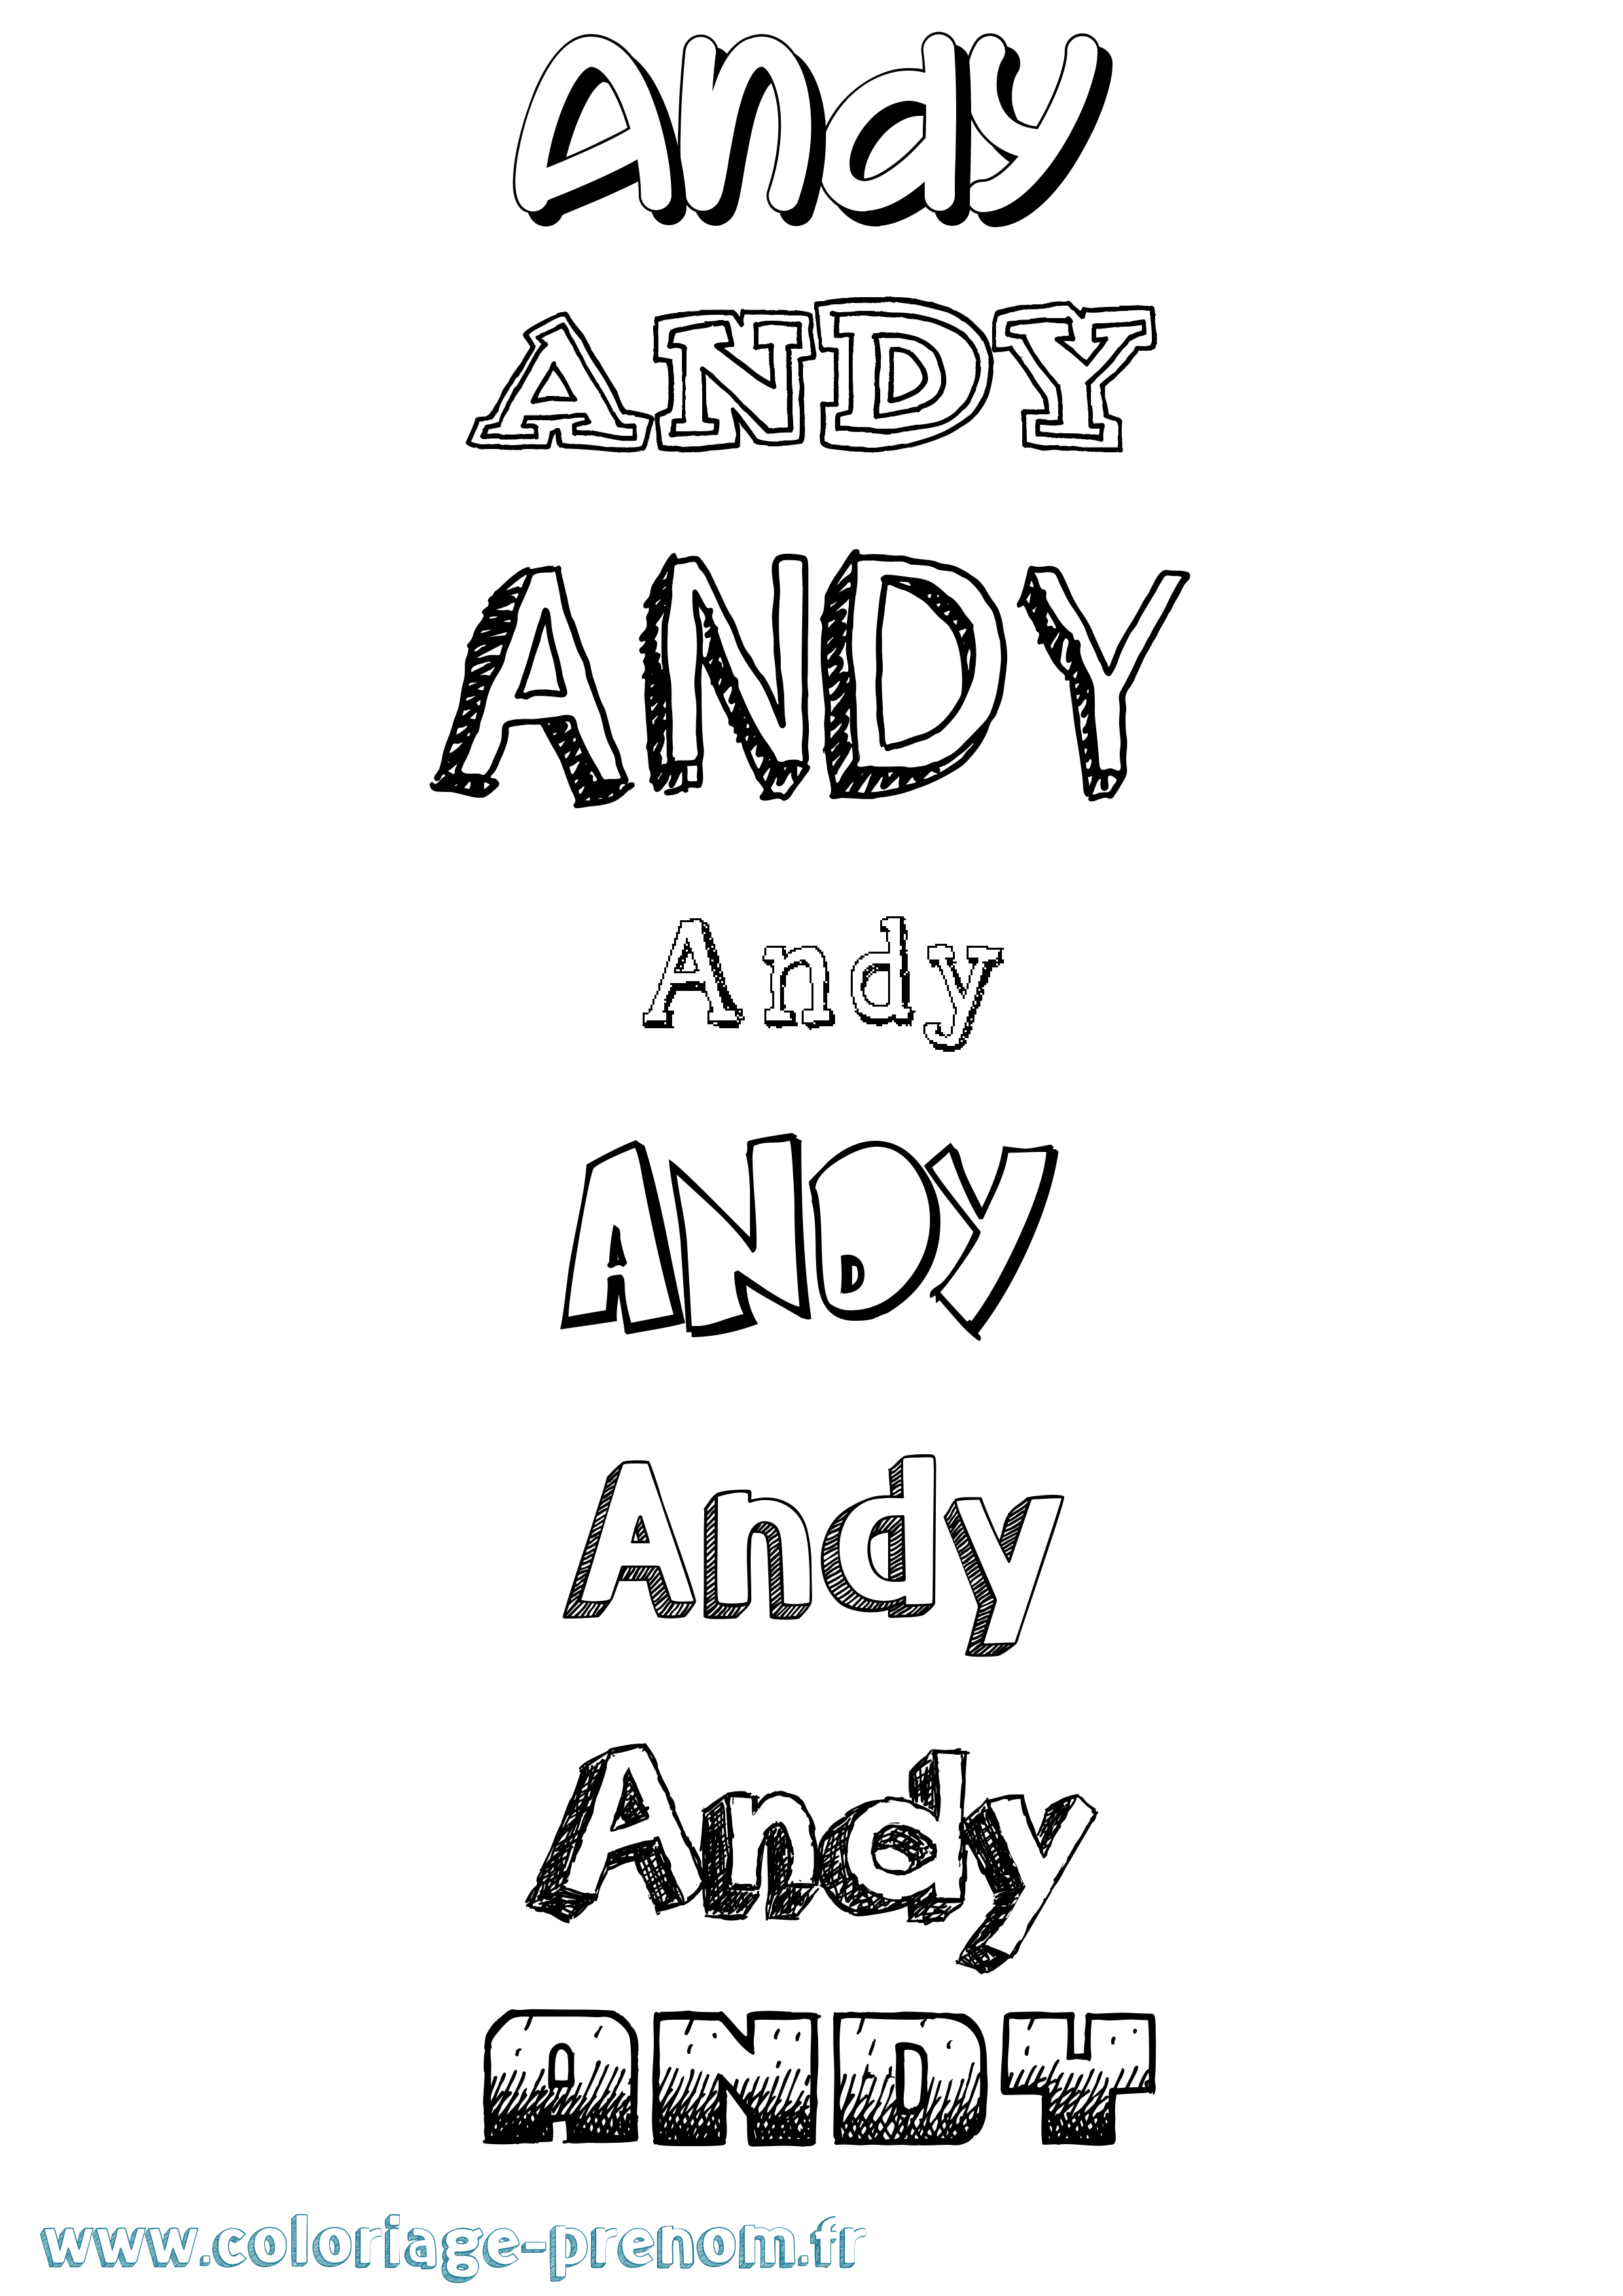 Coloriage prénom Andy